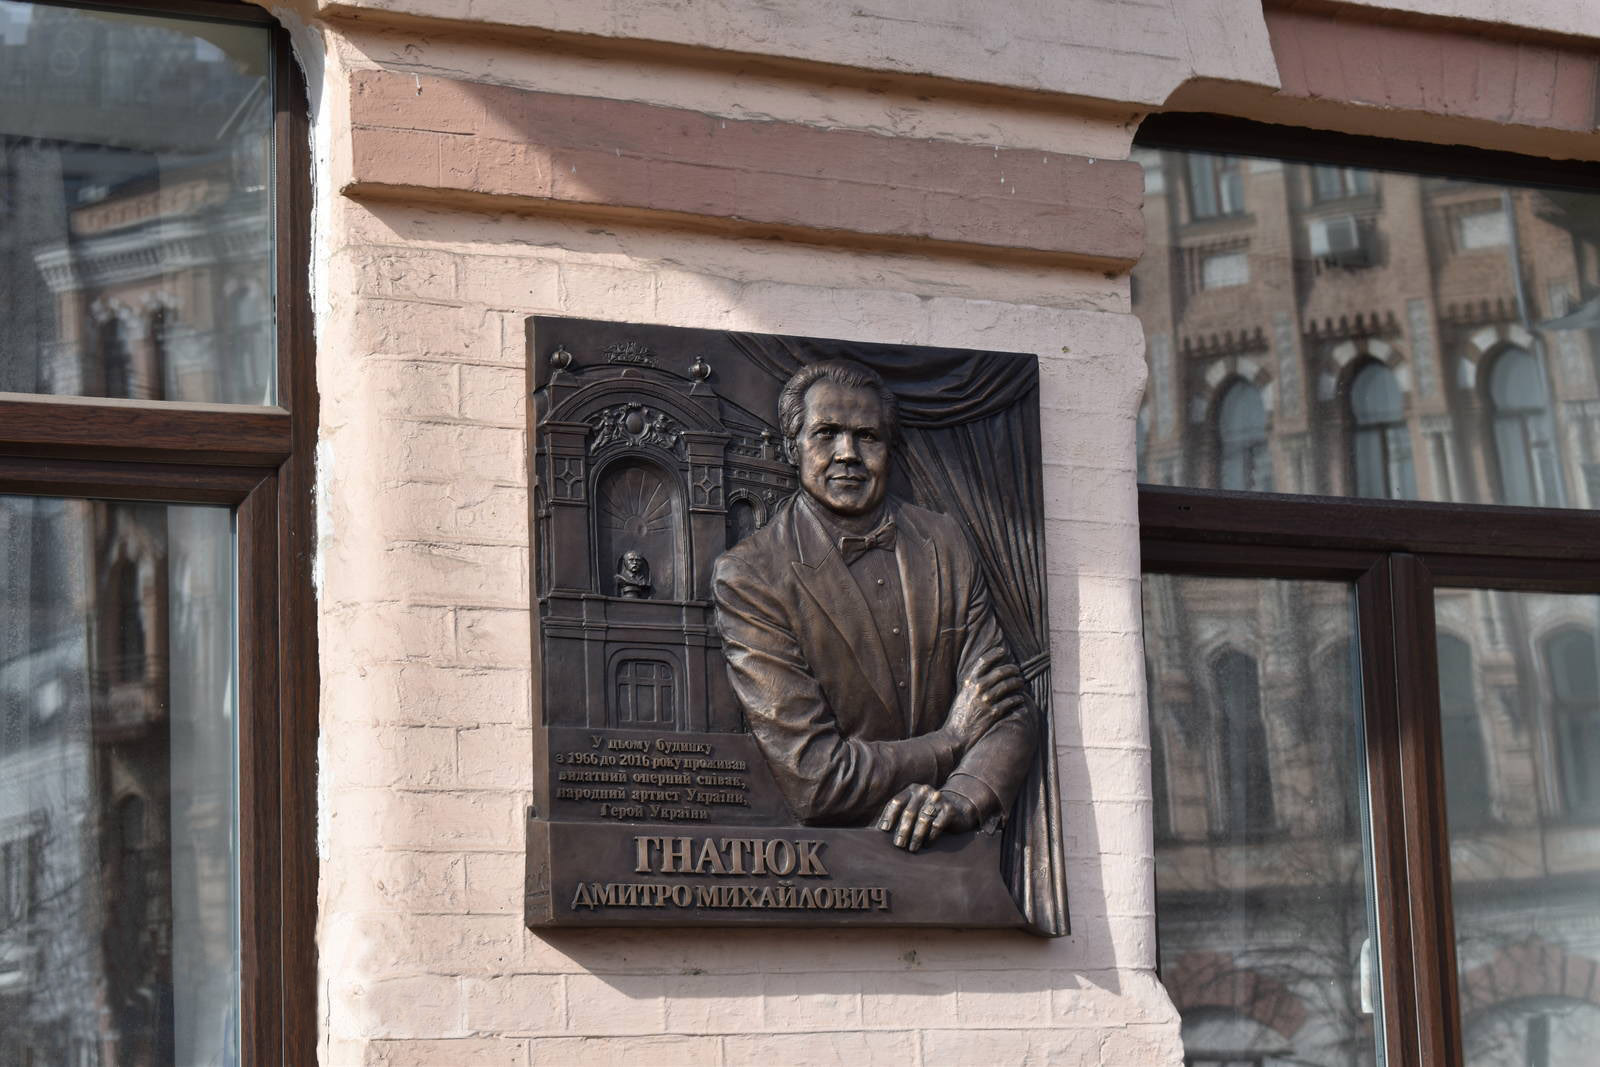 Bronze memorial plaque to the Hero of Ukraine Dmitry Gnatyuk